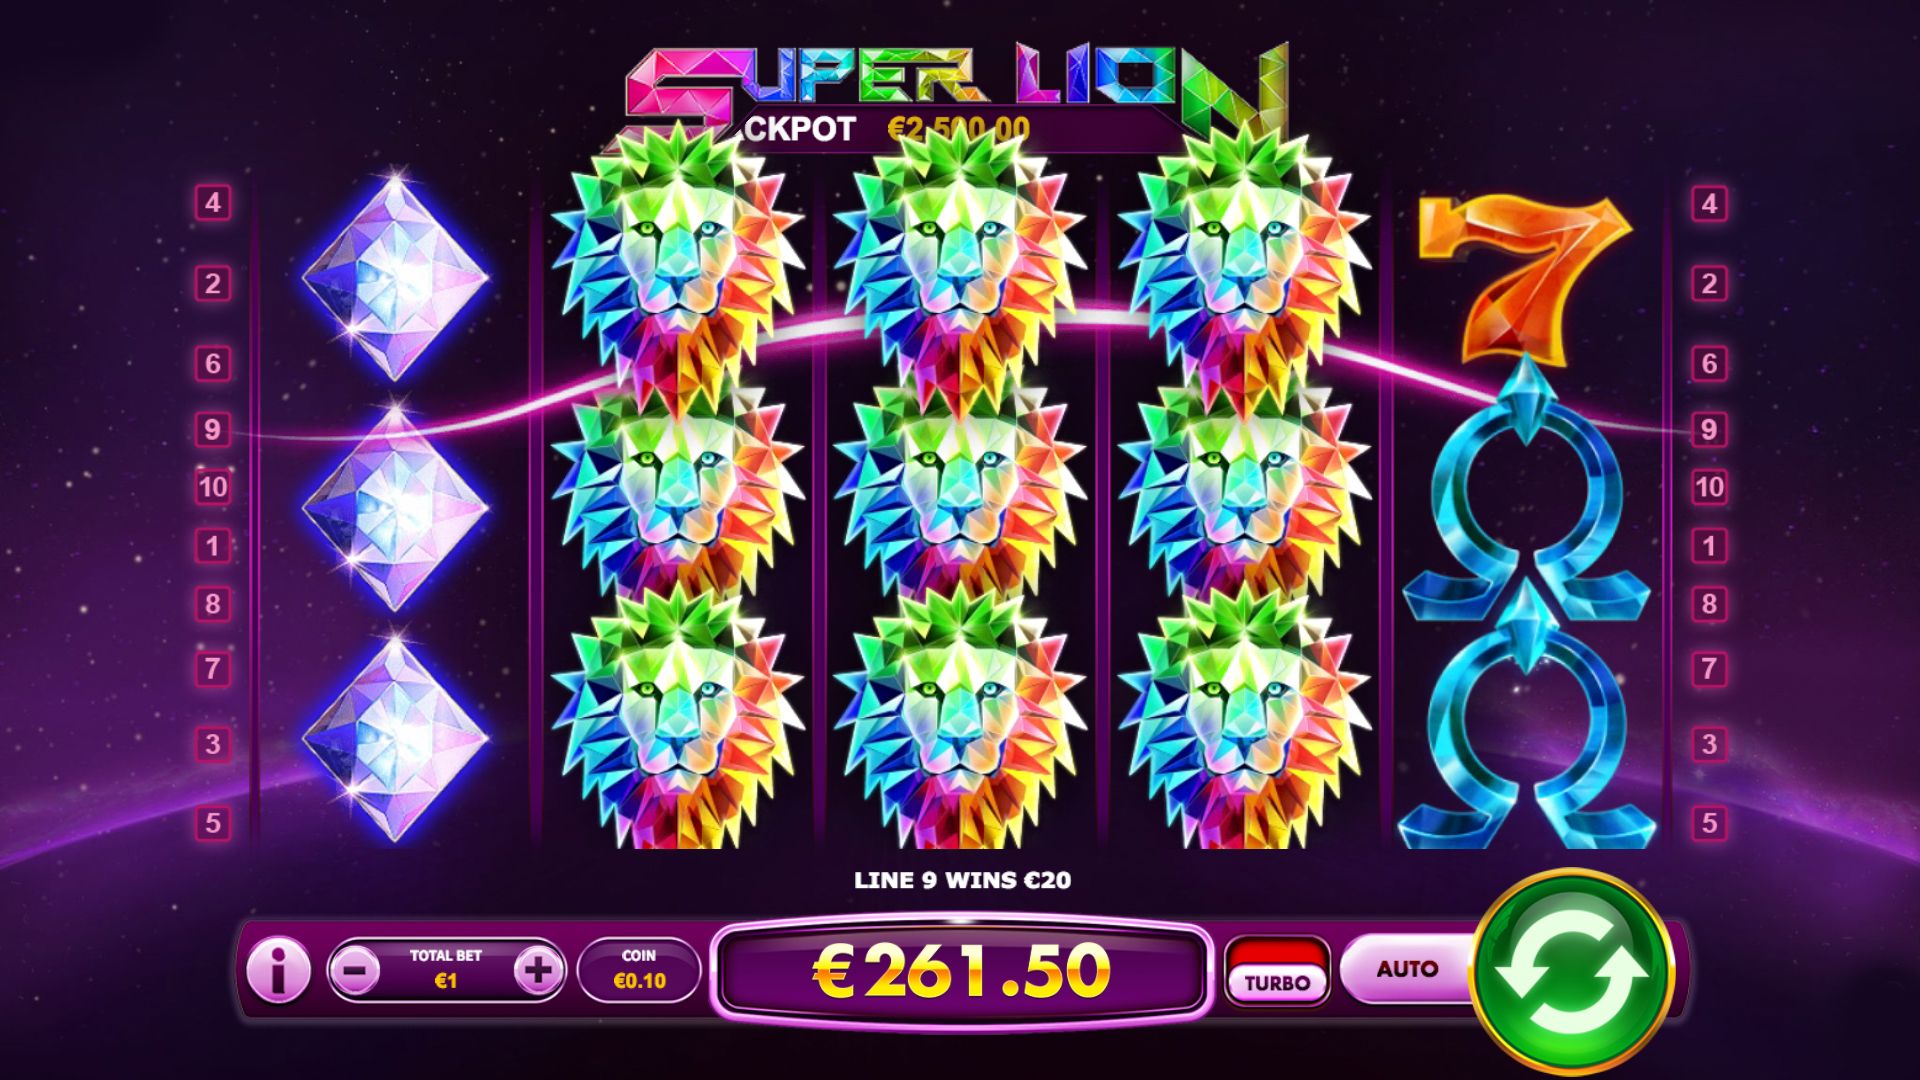 Super lion slot free play